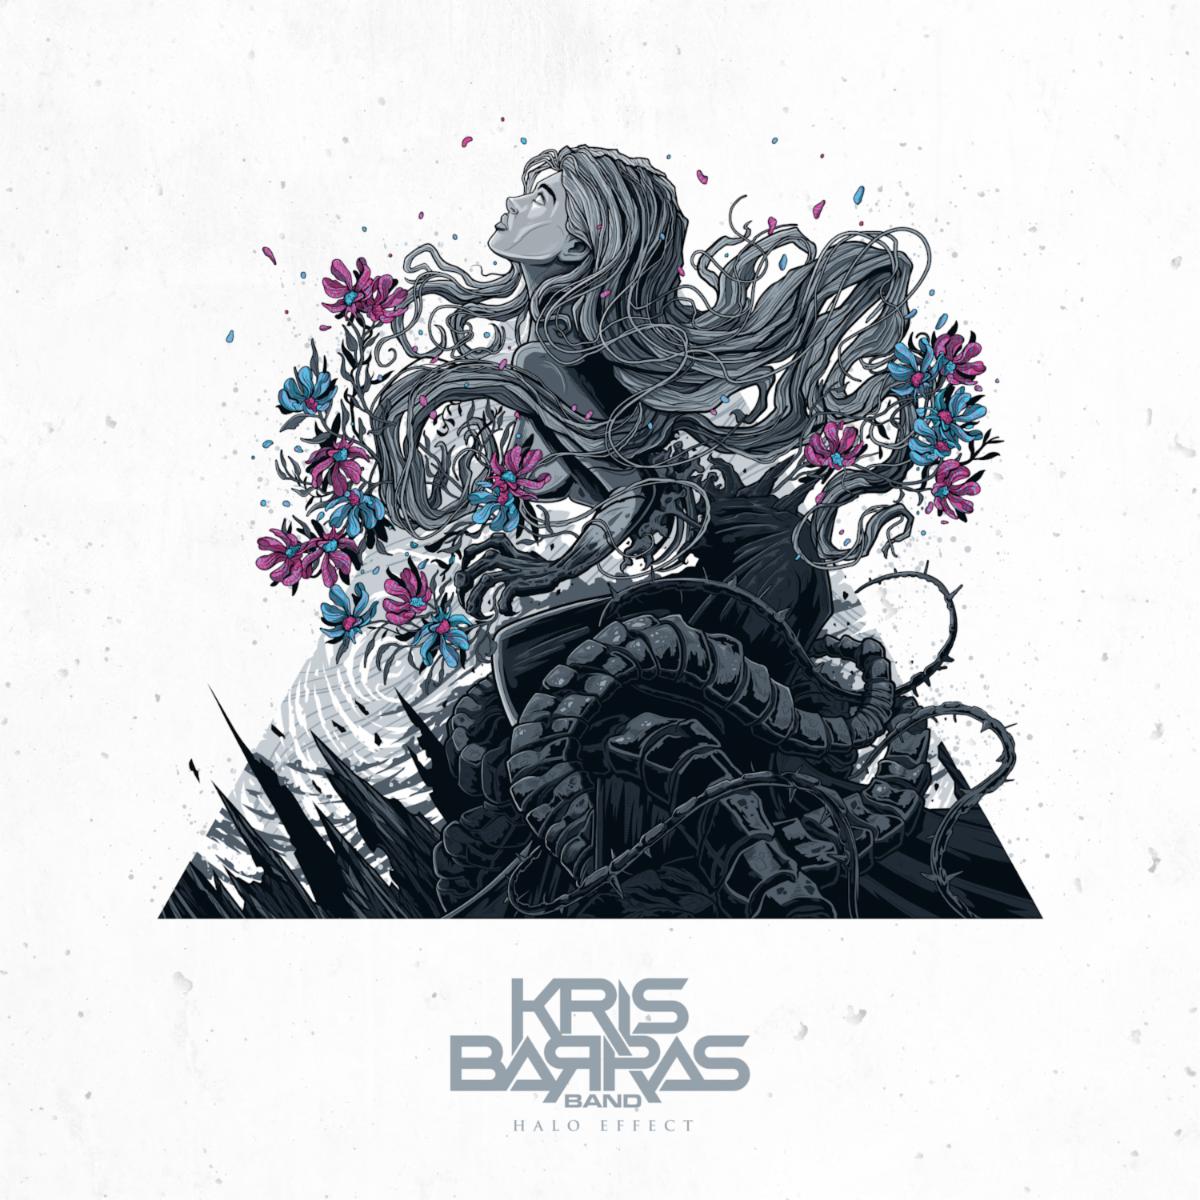 KRIS BARRAS BAND ‘Halo Effect’ album artwork